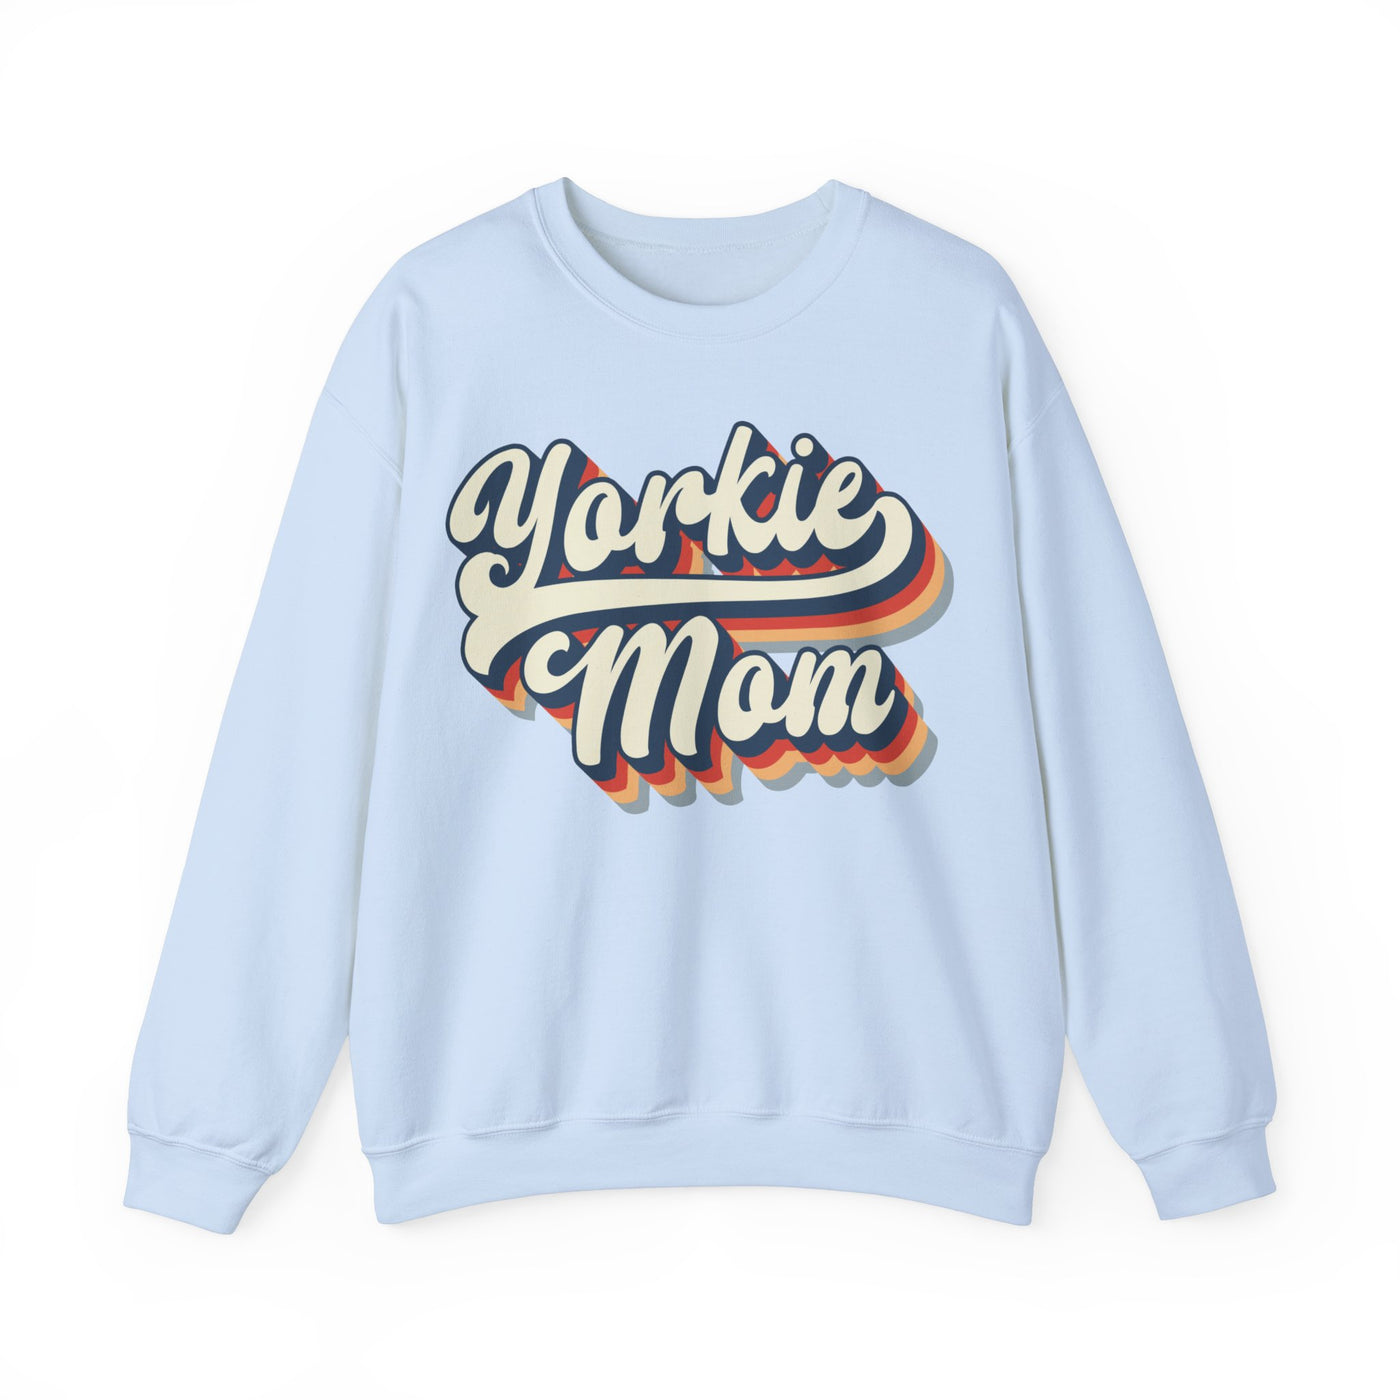 Retro Yorkie Mom Sweatshirt